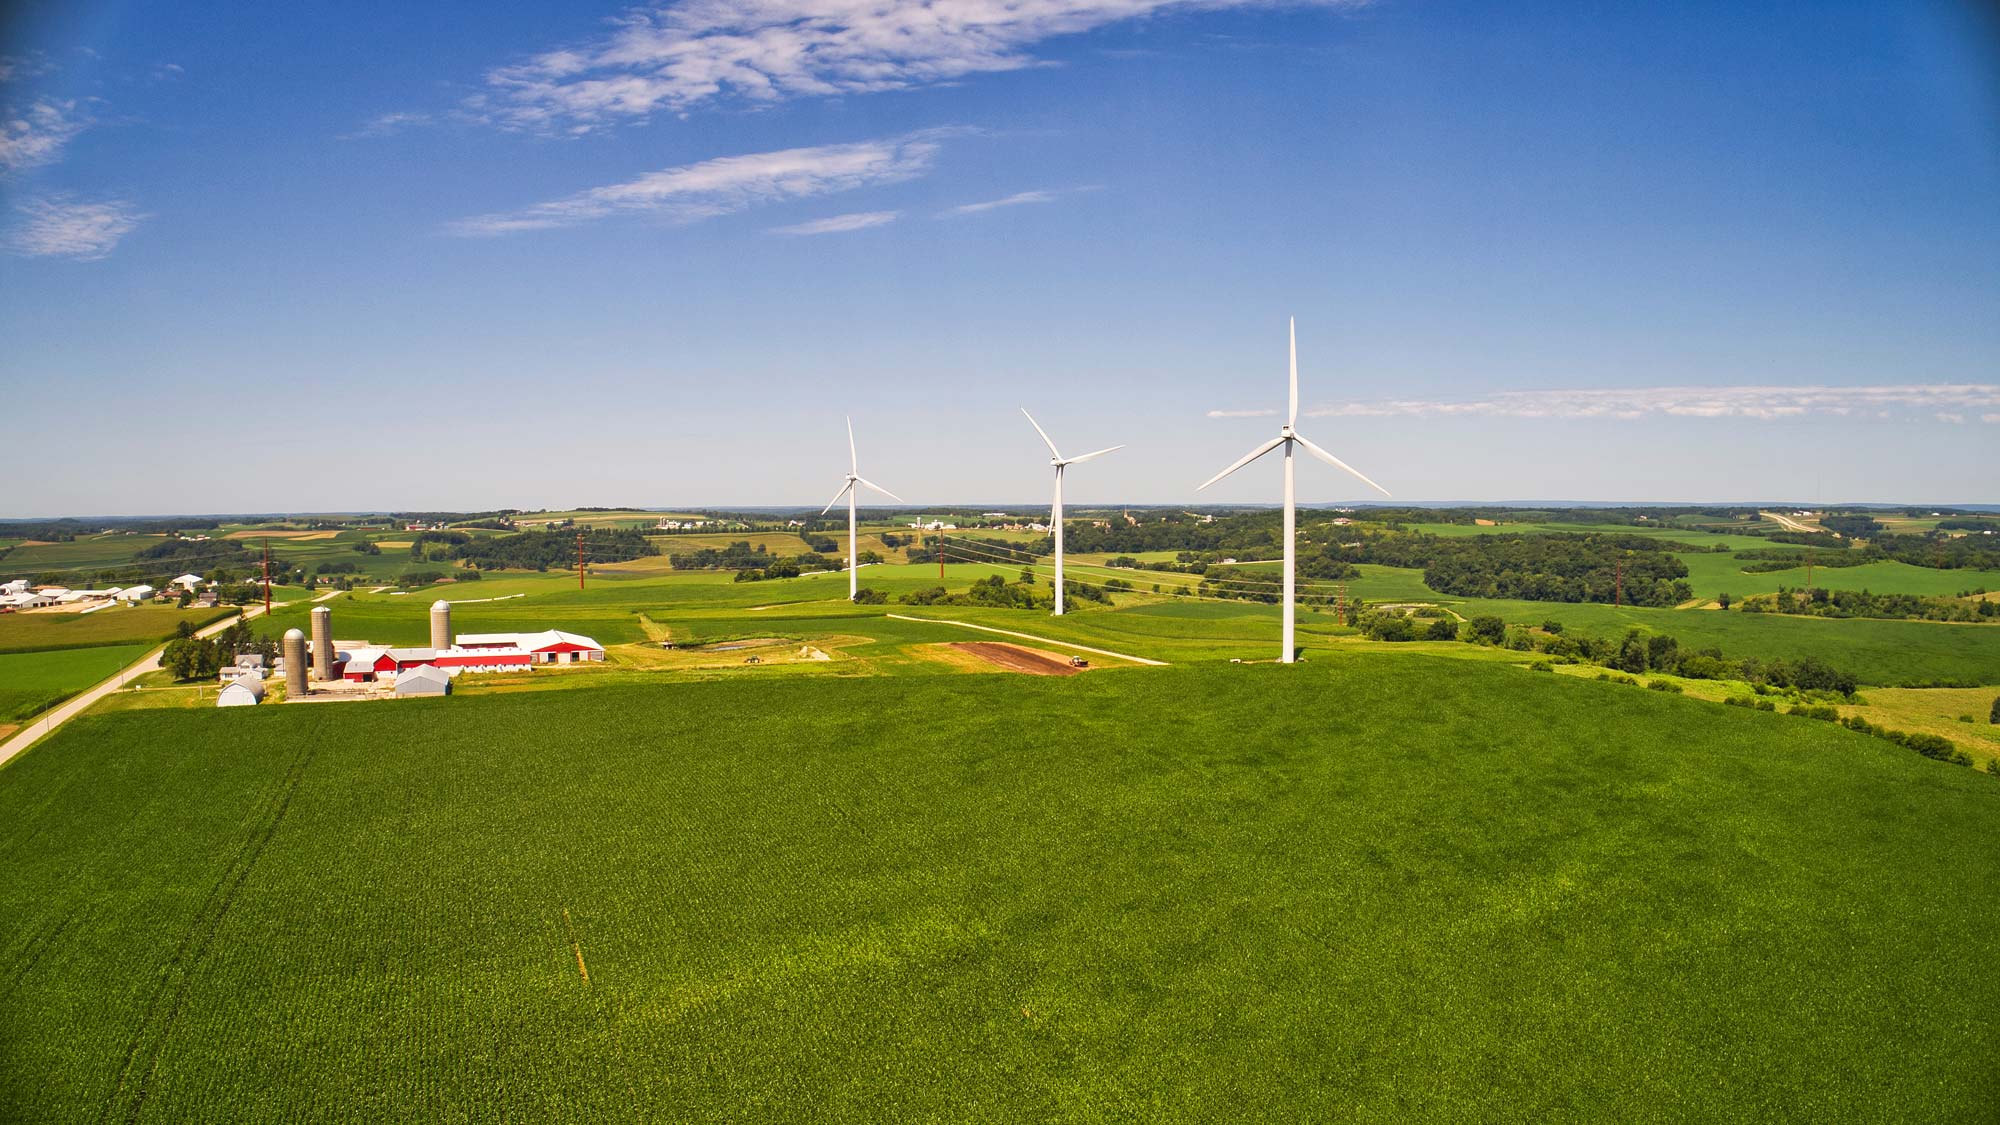 Small scale wind farm with three turbines near established traditional farm